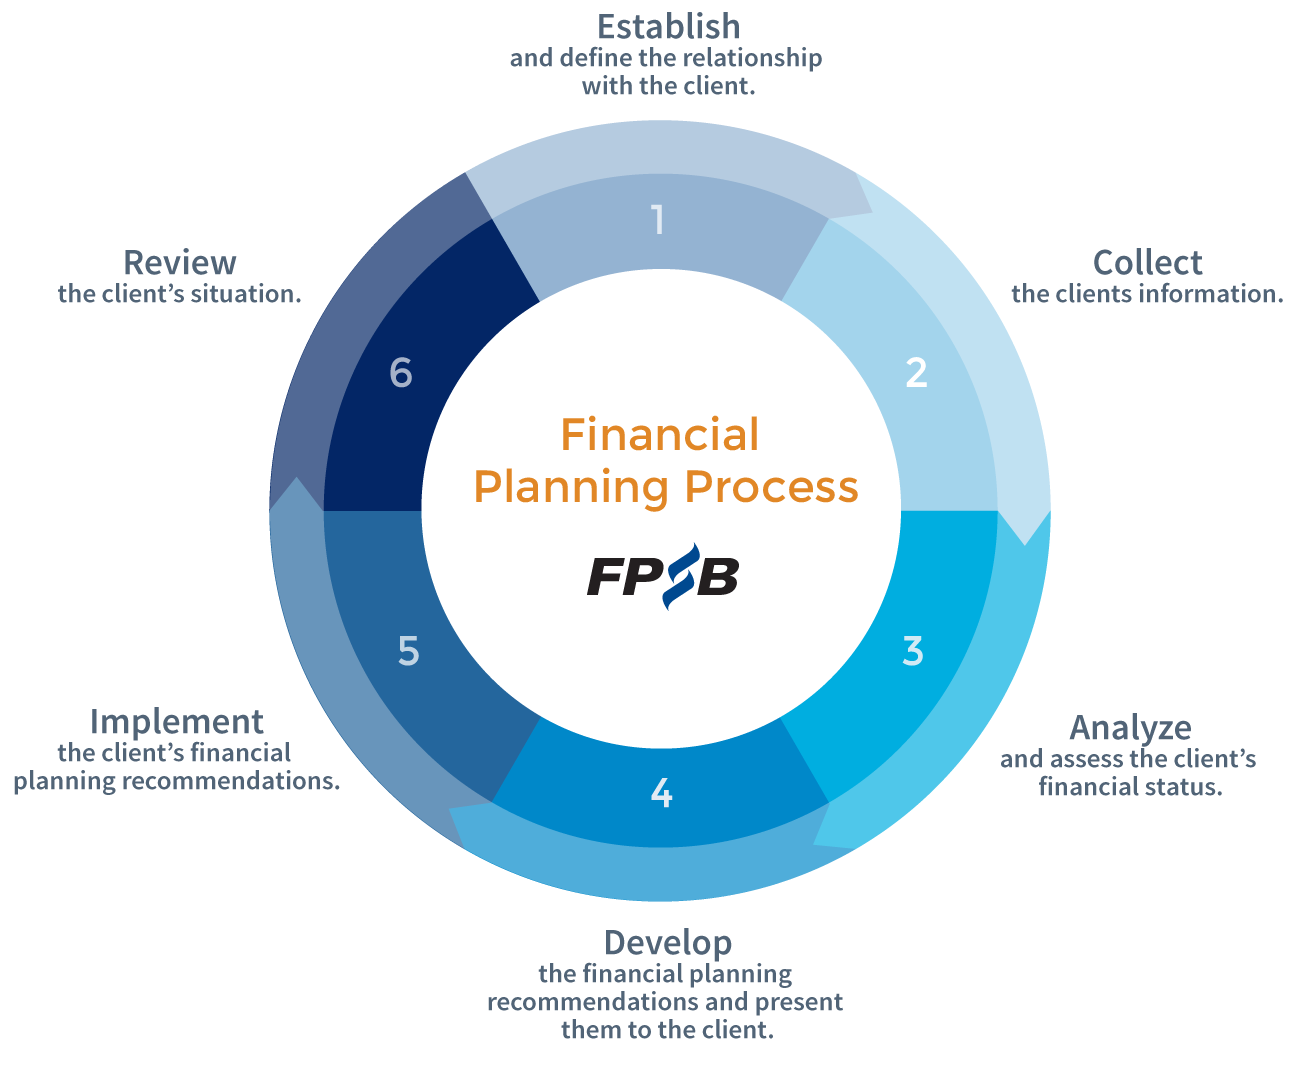 Financial Planning Process FPSB